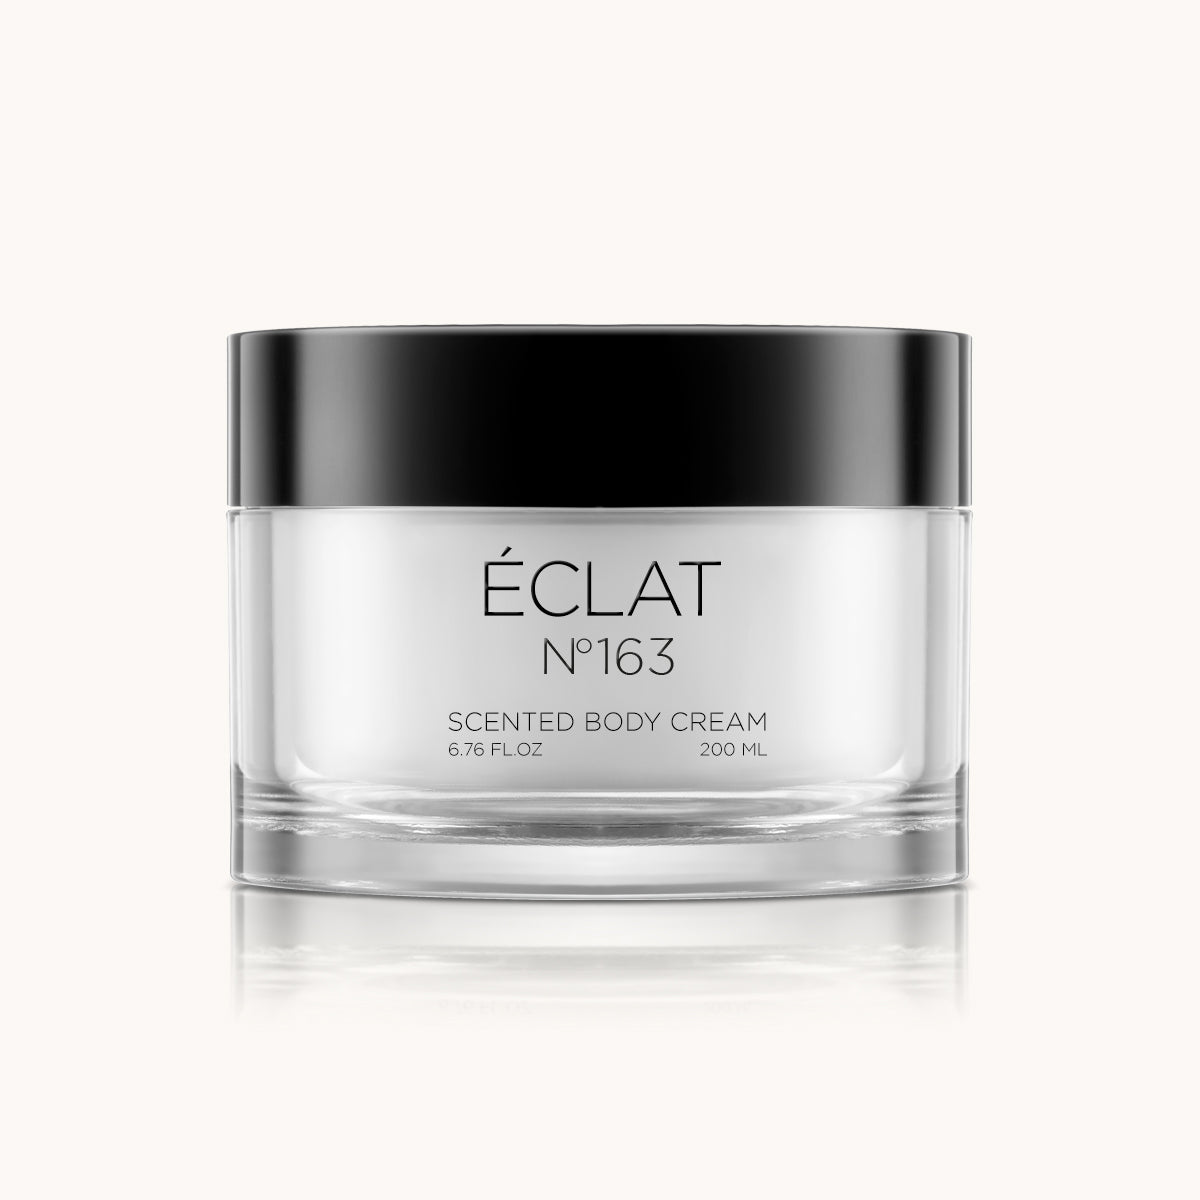 ÉCLAT 163 Body Cream